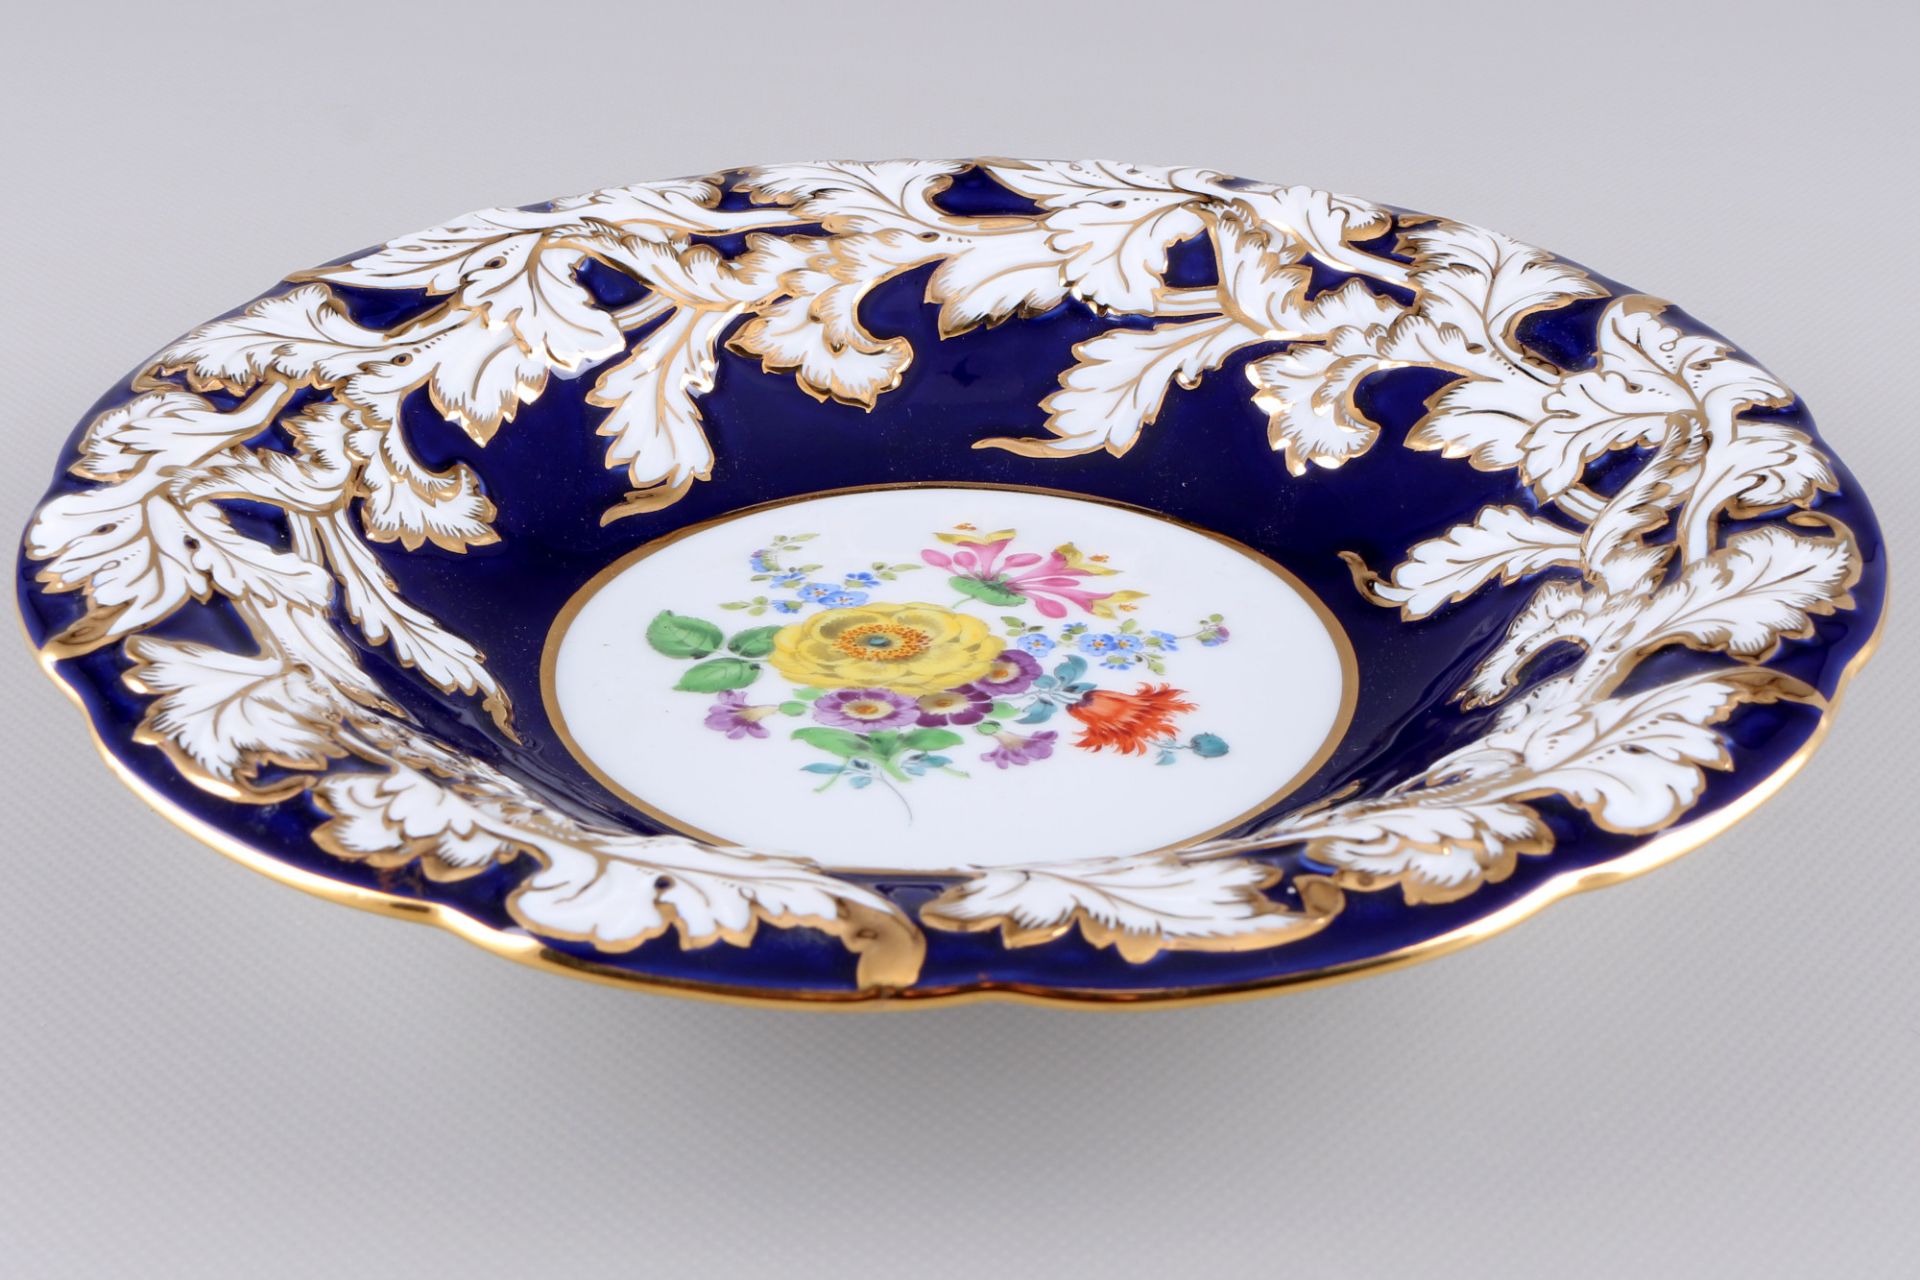 Meissen B-Form Flower Bouquet royal blue splendor bowl 1st choice, Prunkschale kobaltblau 1.Wahl, - Image 2 of 3